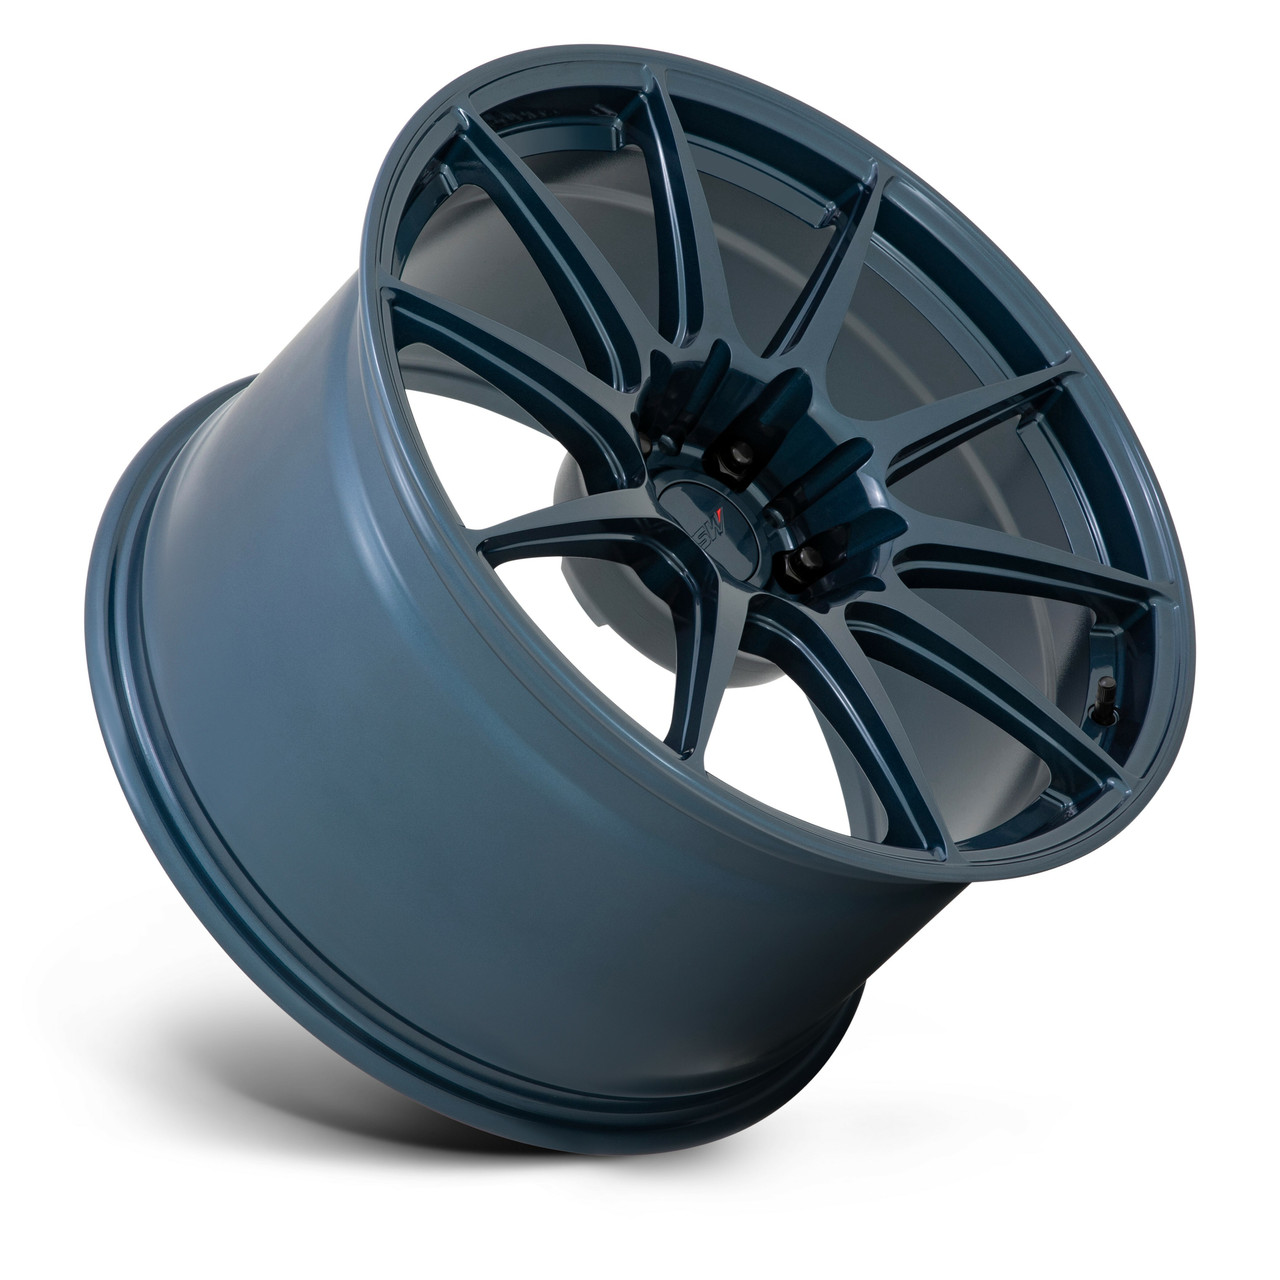 TSW Kemora 18x9.5 5x4.5 Gloss Dark Blue Wheel 18" 38mm Rim